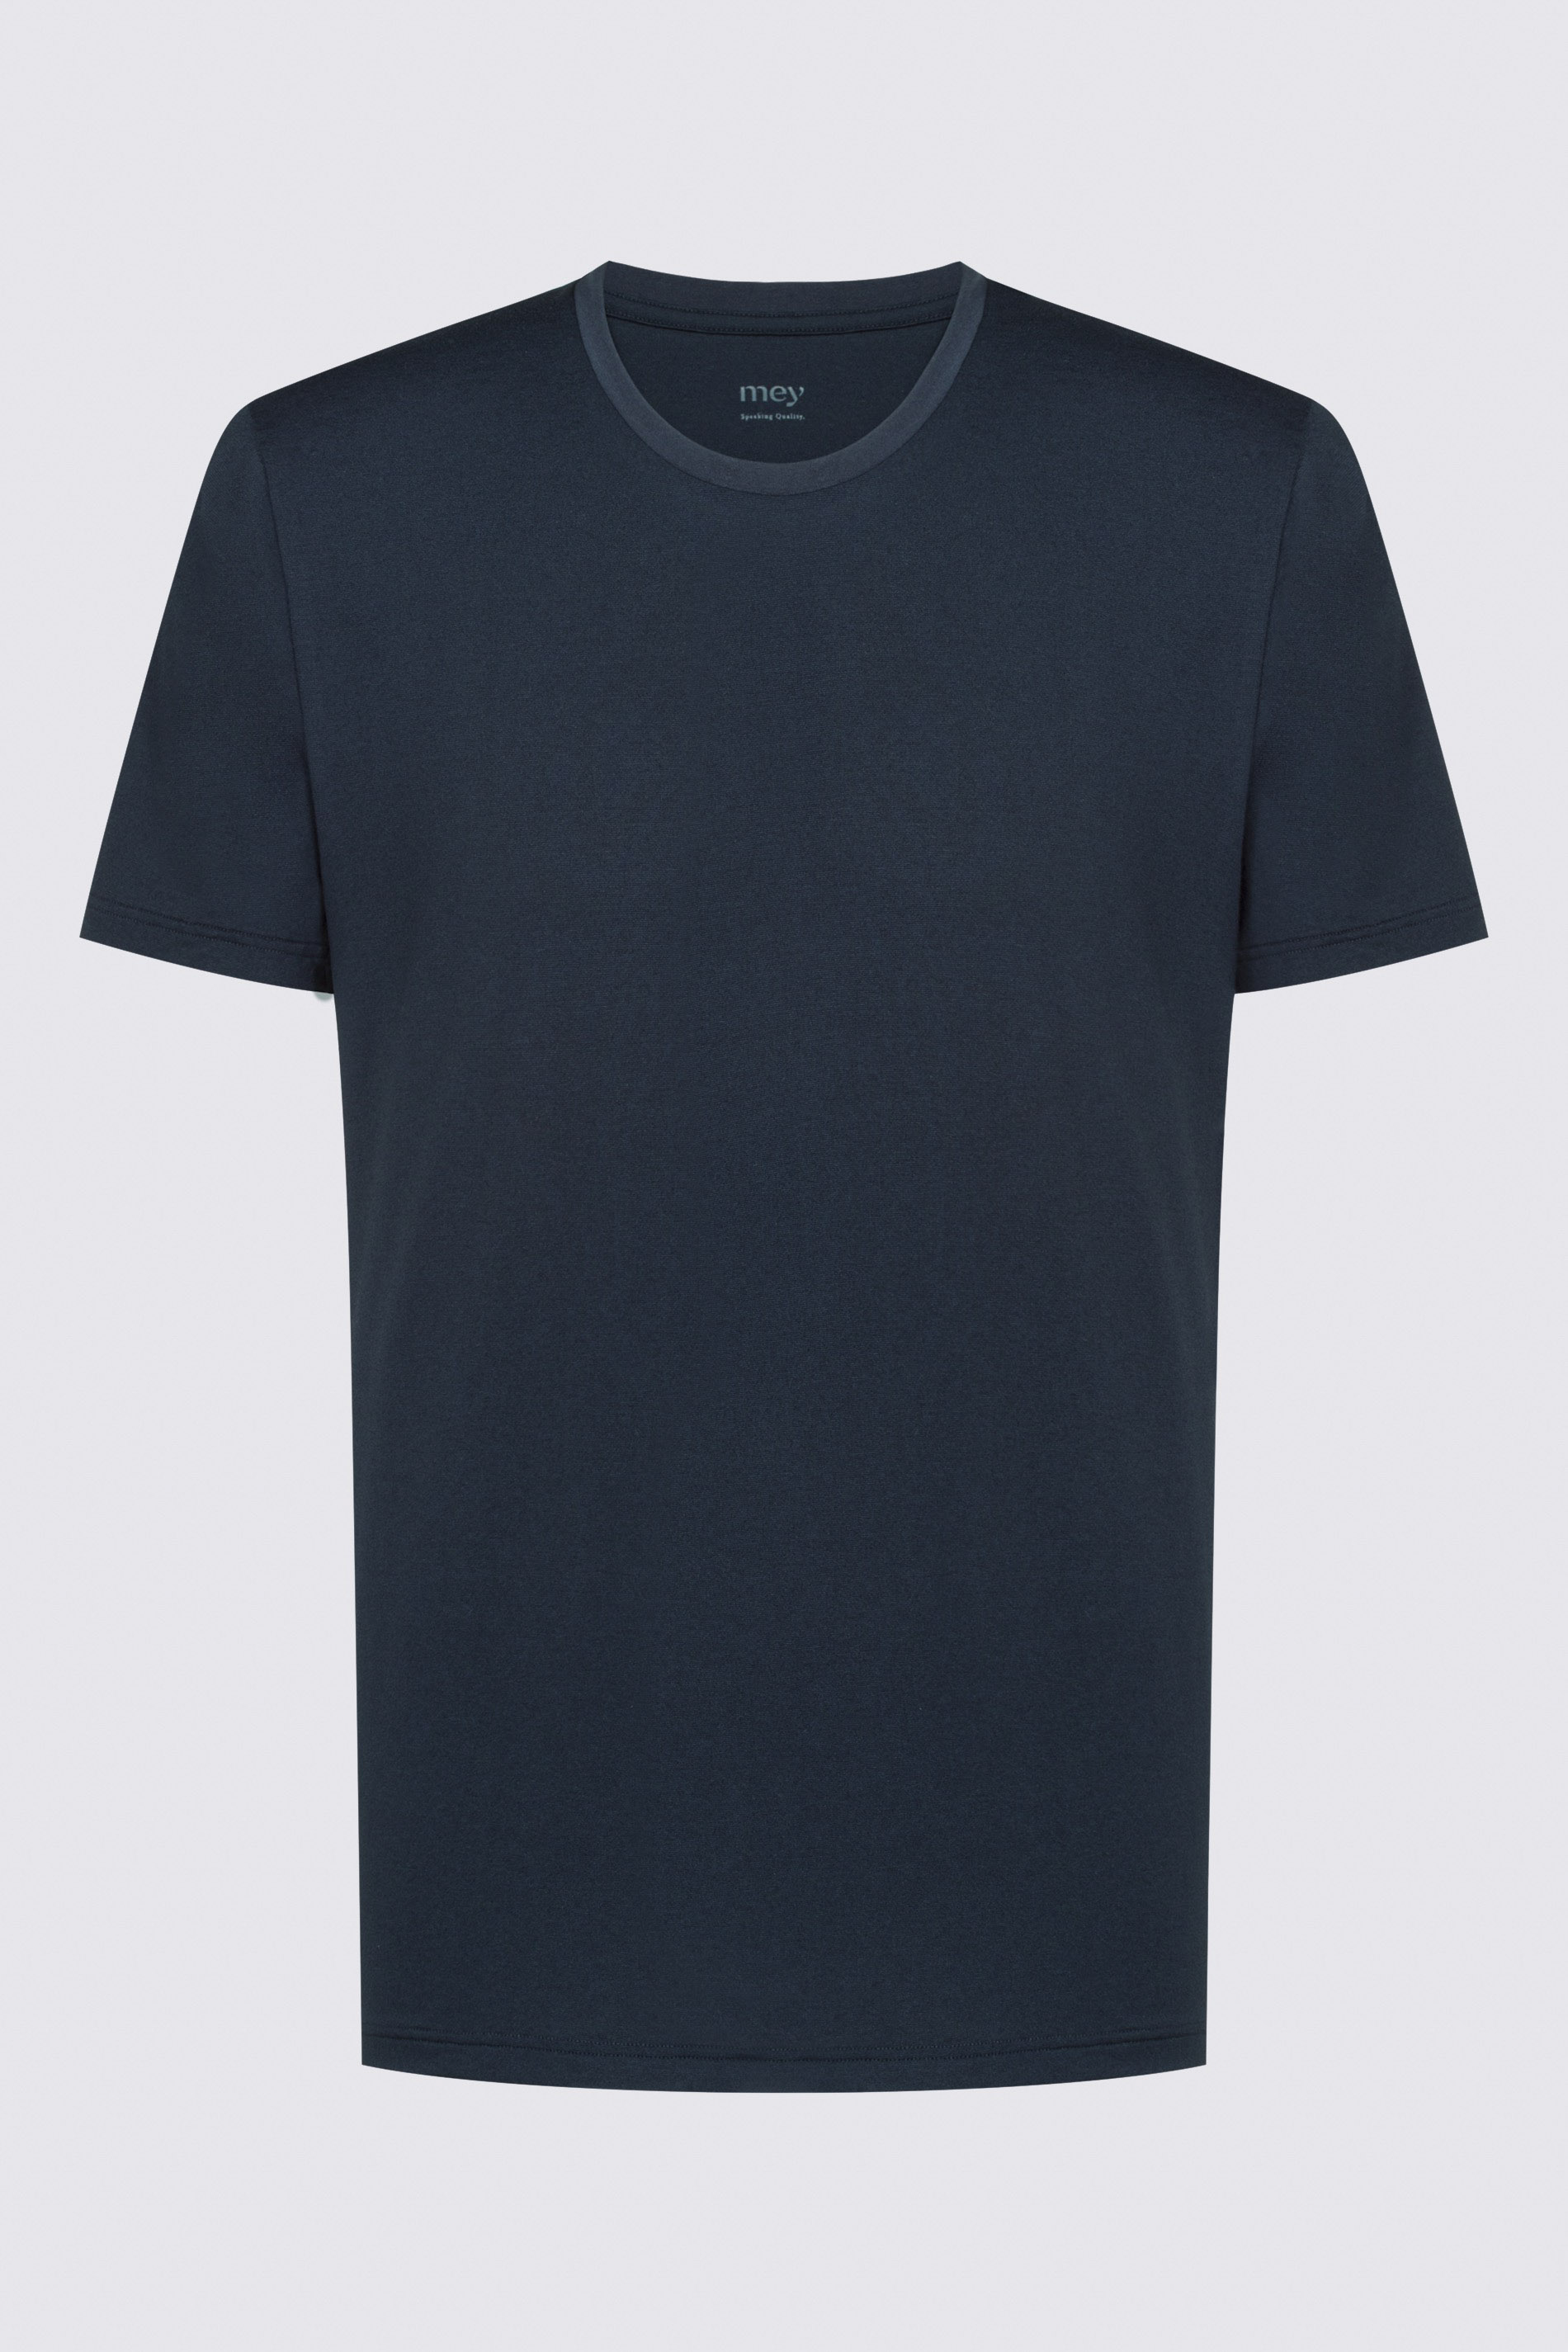 T-Shirt Dry Cotton Colour Freisteller | mey®